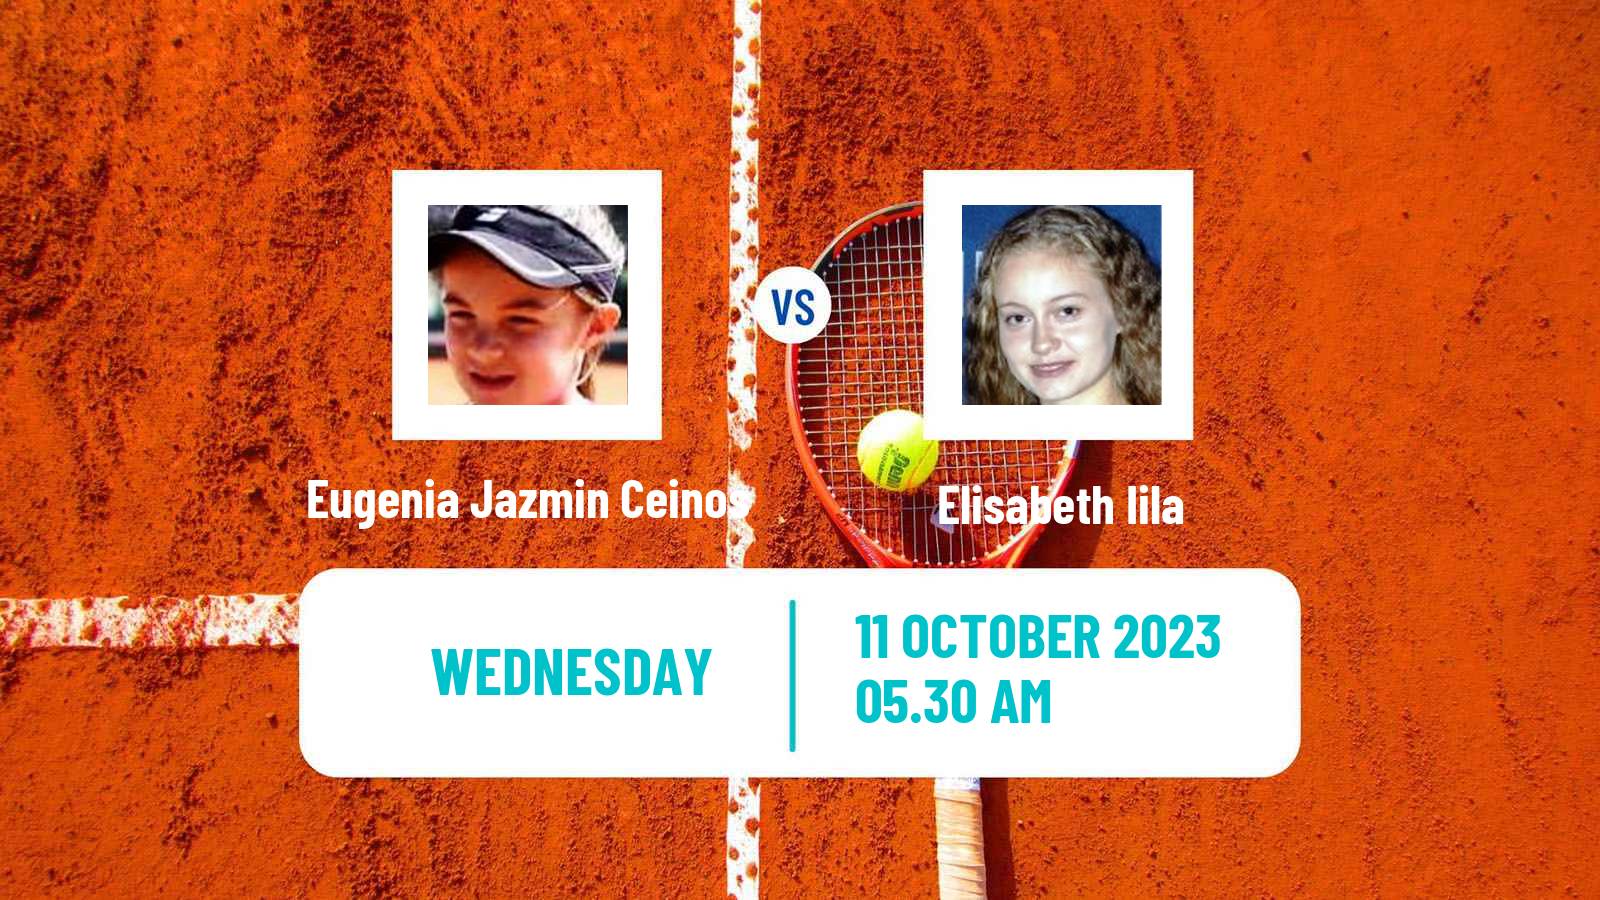 Tennis ITF W15 Monastir 36 Women Eugenia Jazmin Ceinos - Elisabeth Iila